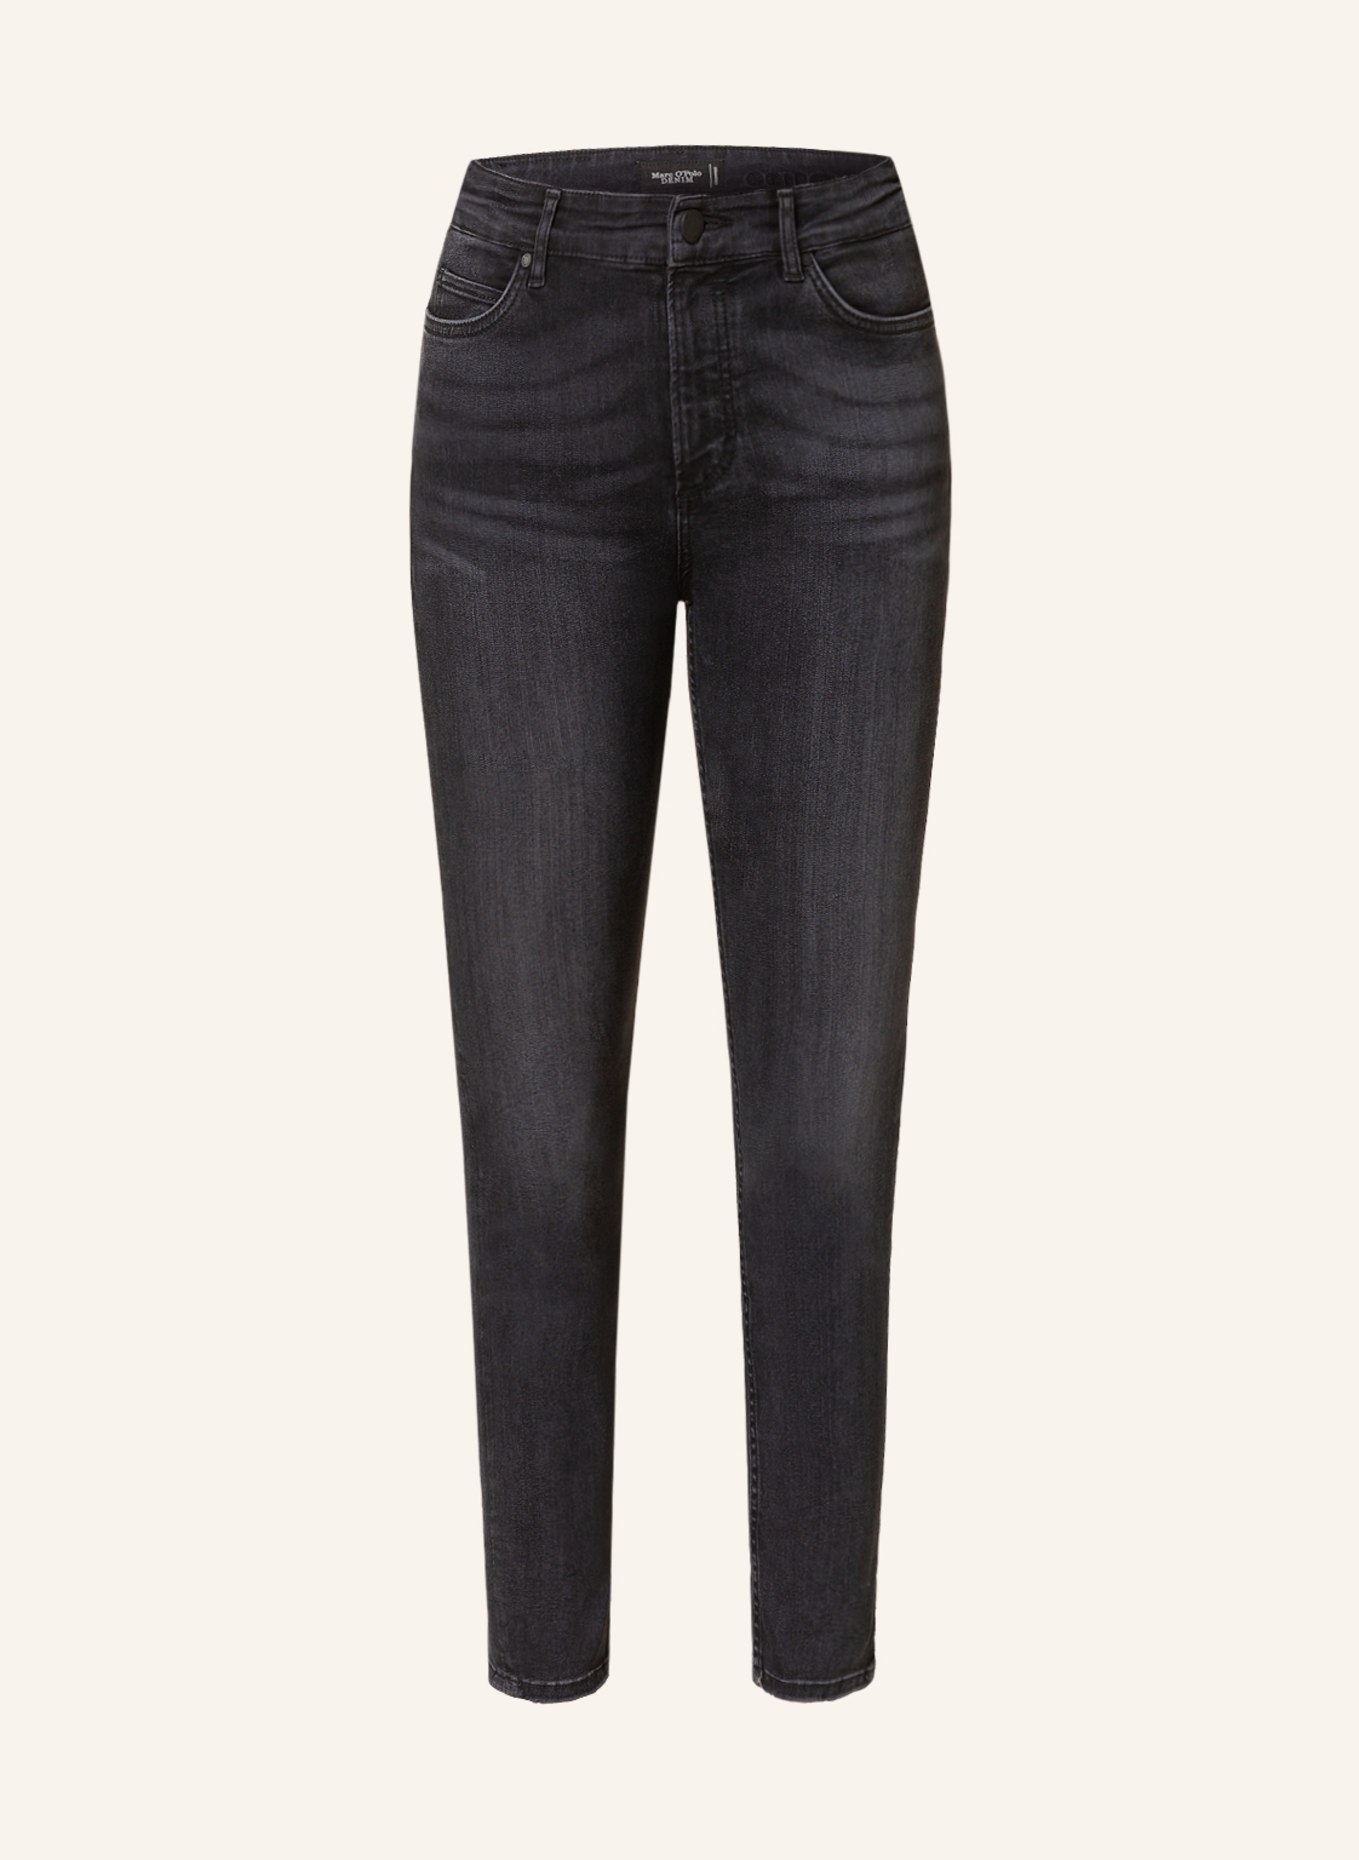 Marc O'Polo DENIM Skinny Jeans , Farbe: Q03 multi/mid grey (Bild 1)